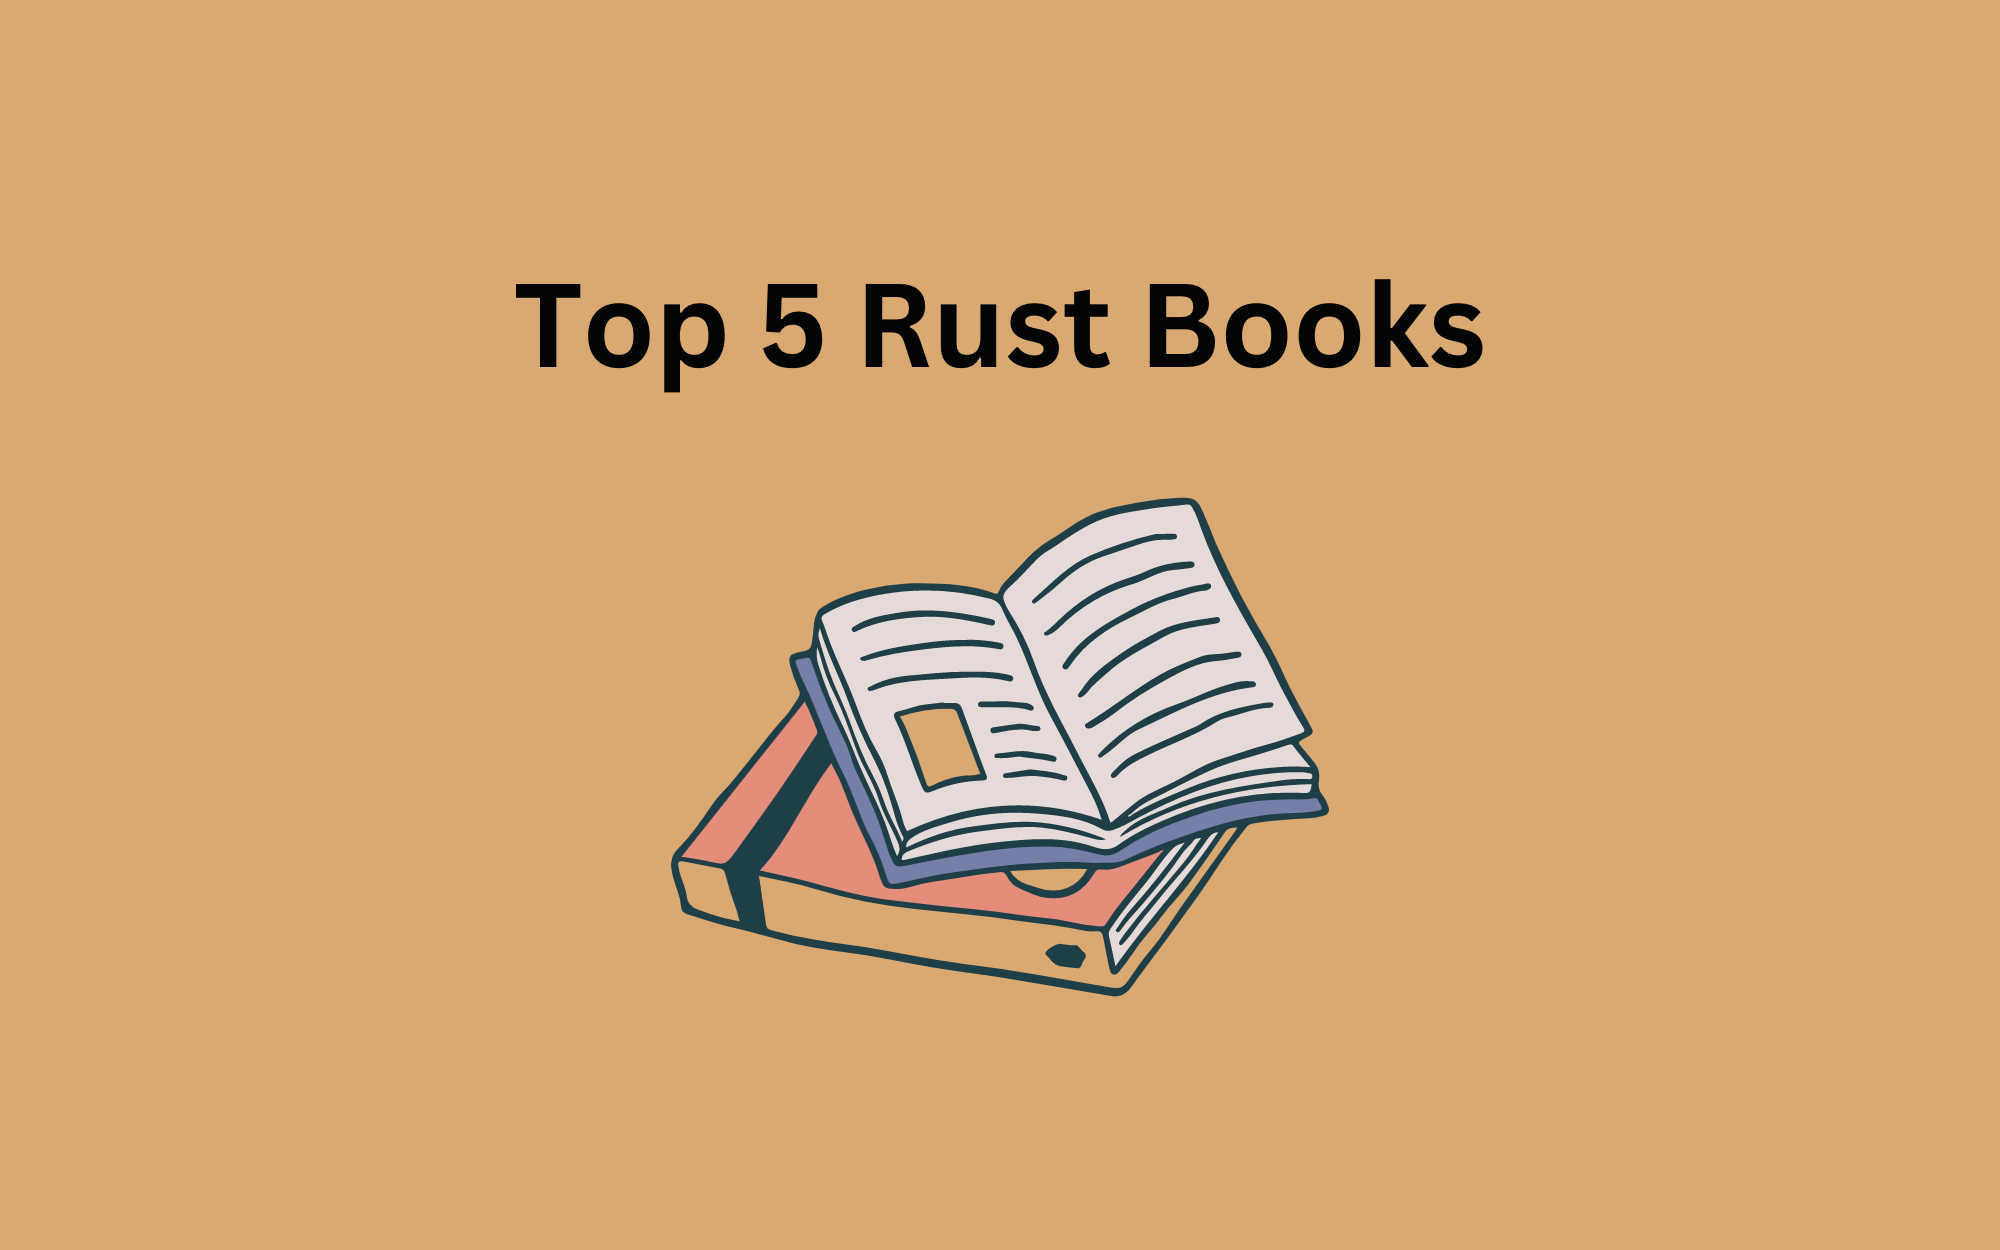 Top 5 Rust Books